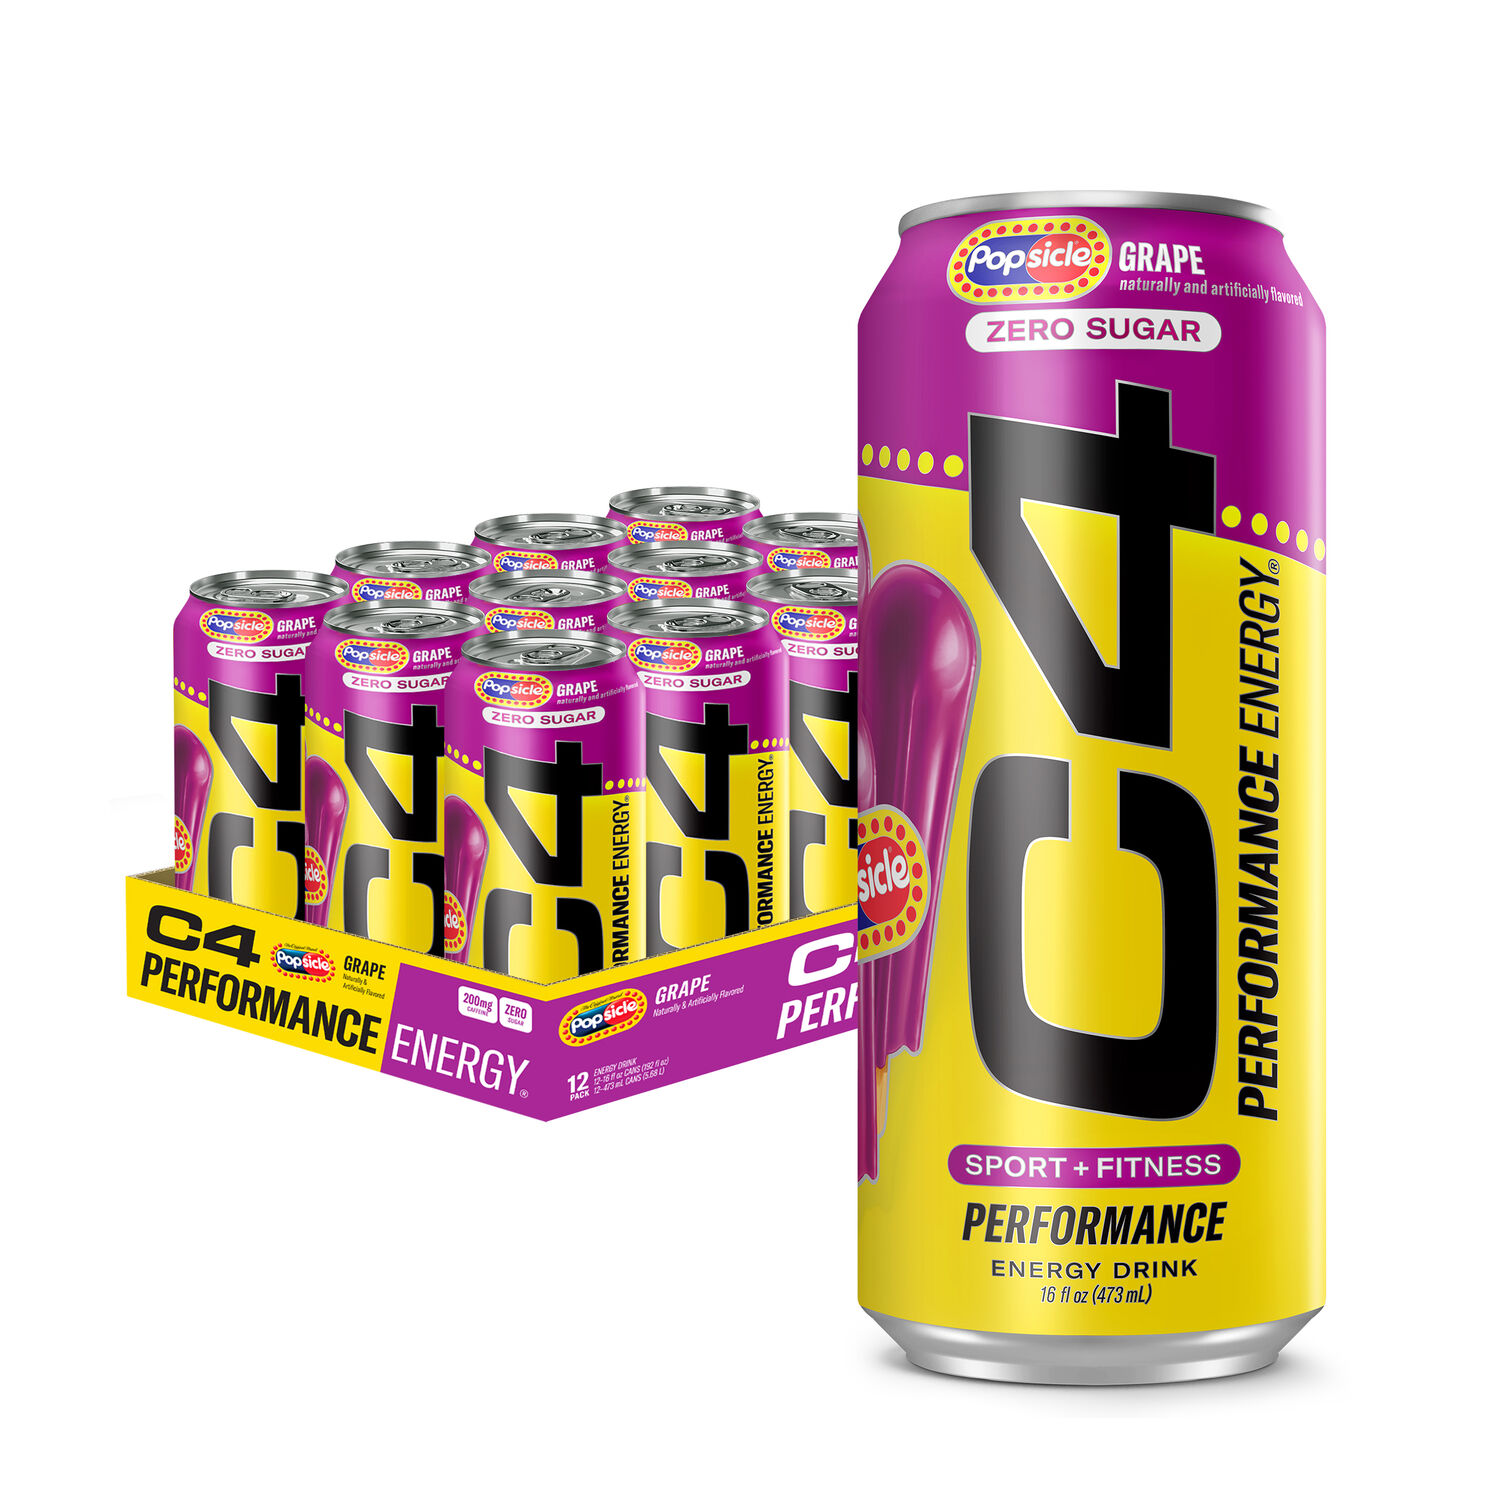 Cellucor C4 Performance Energy Drink - Grape - 16Oz. (12 Cans) - Zero Sugar